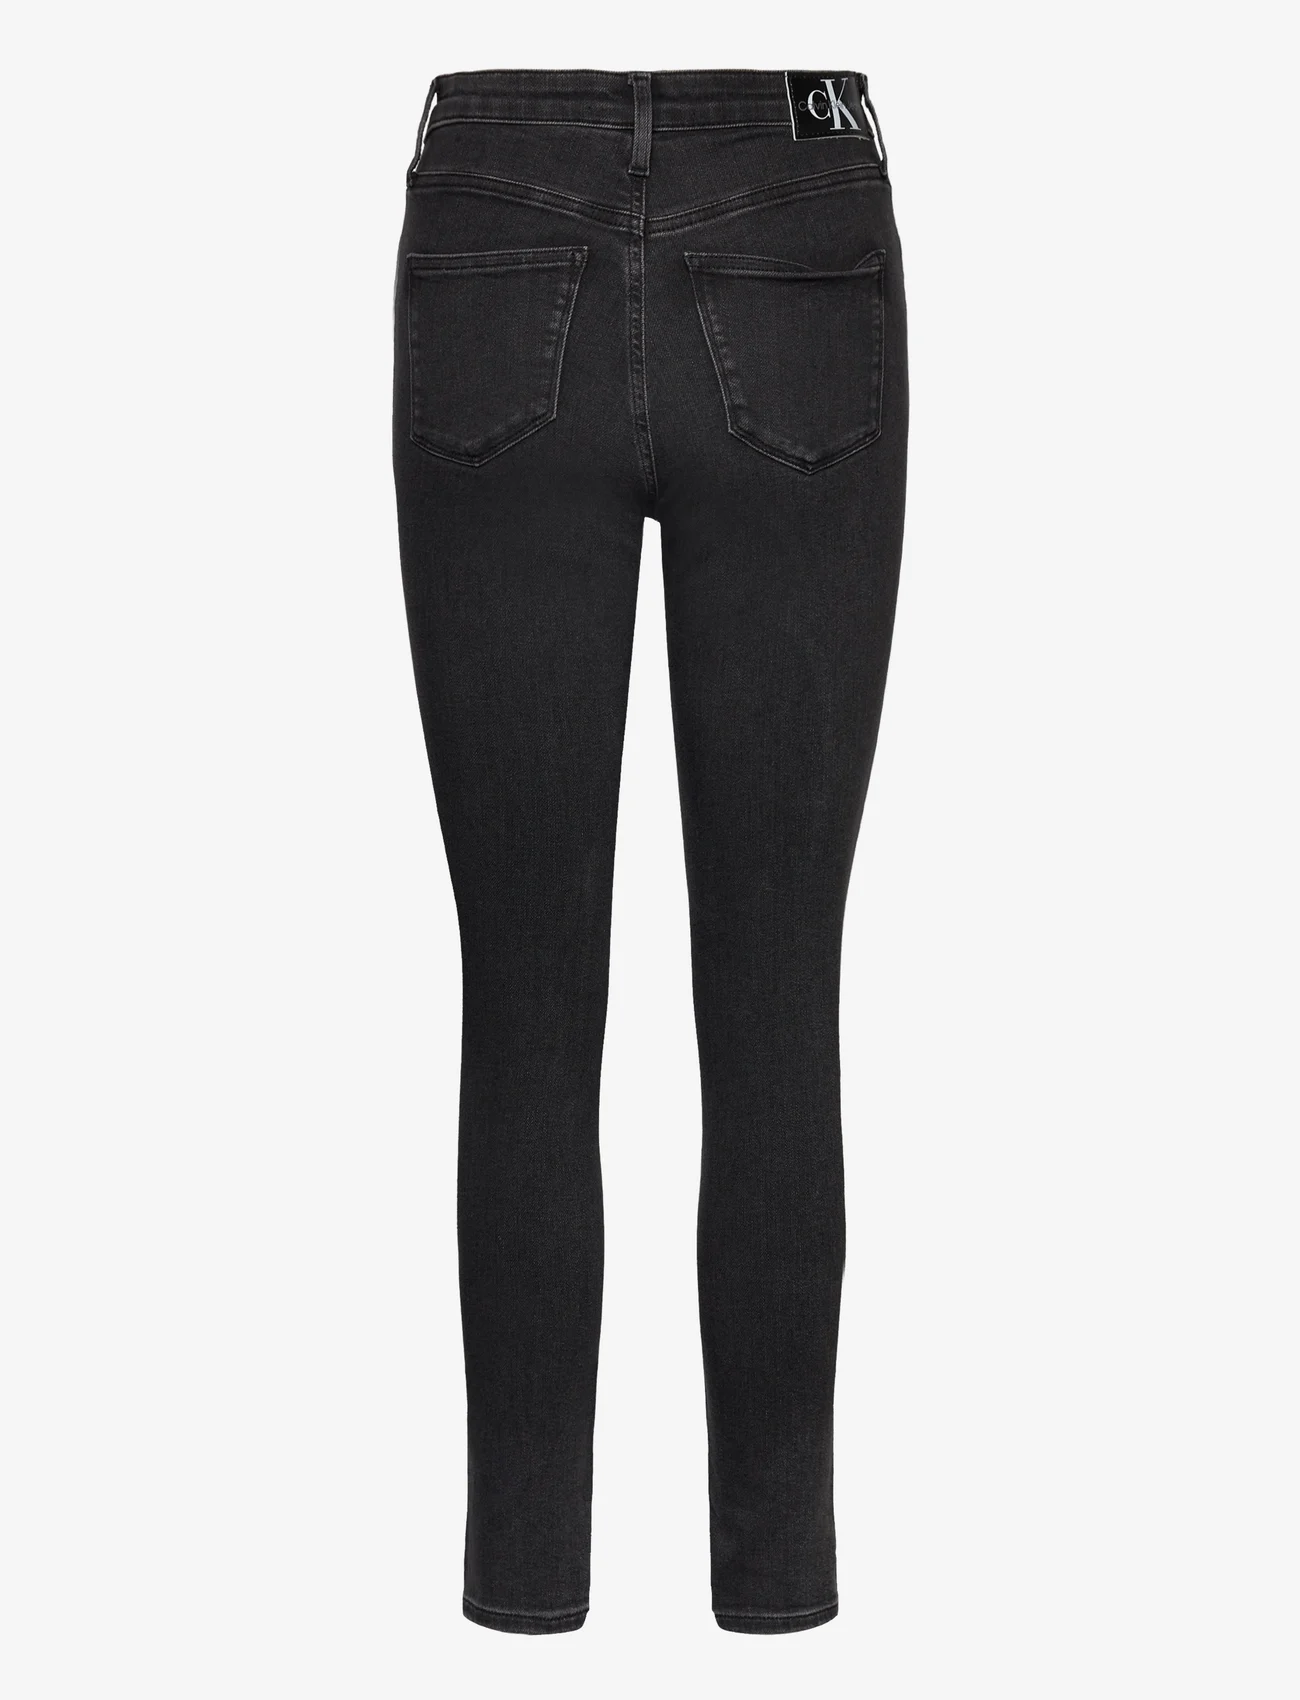 Calvin Klein Jeans - HIGH RISE SKINNY - skinny jeans - denim black - 1